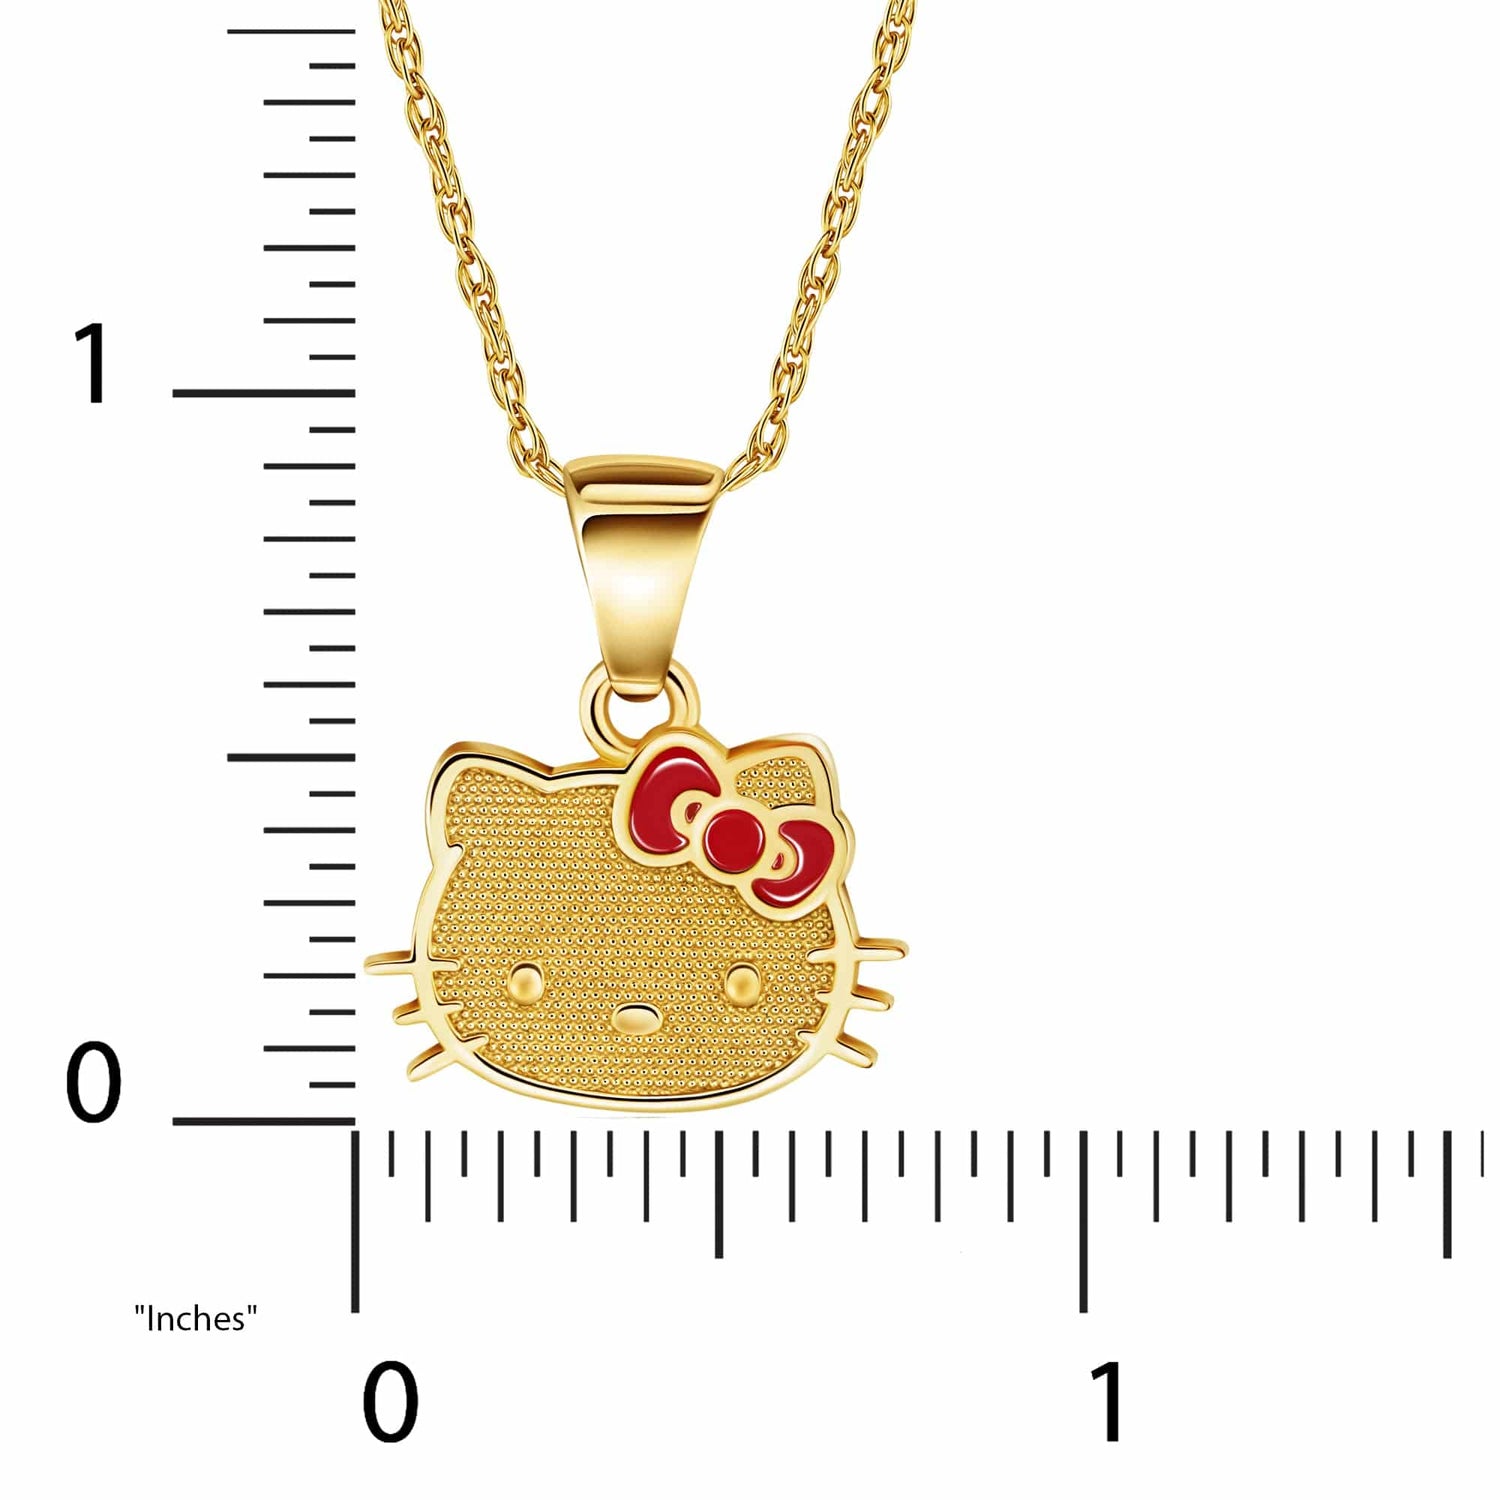 Hello Kitty 10K Gold Pendant Necklace